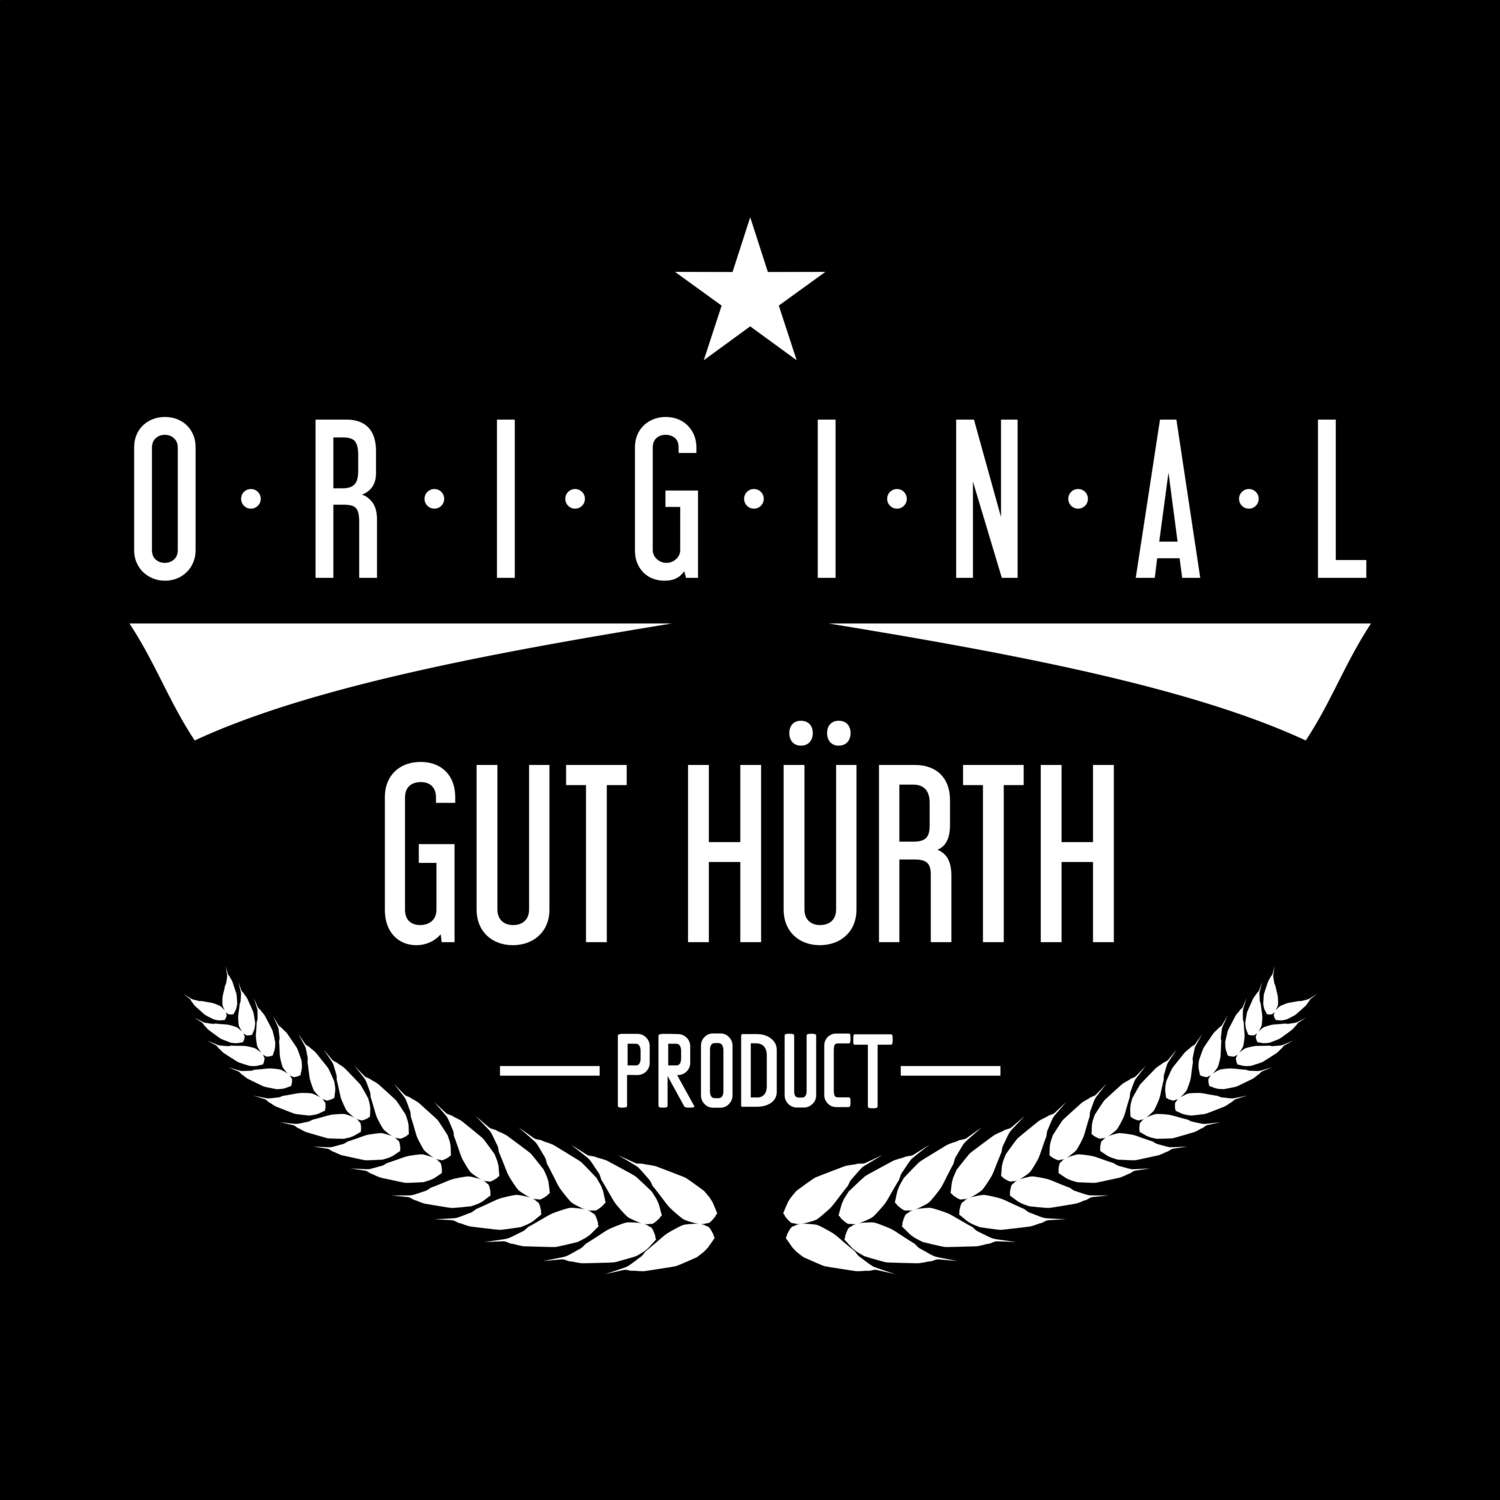 Gut Hürth T-Shirt »Original Product«